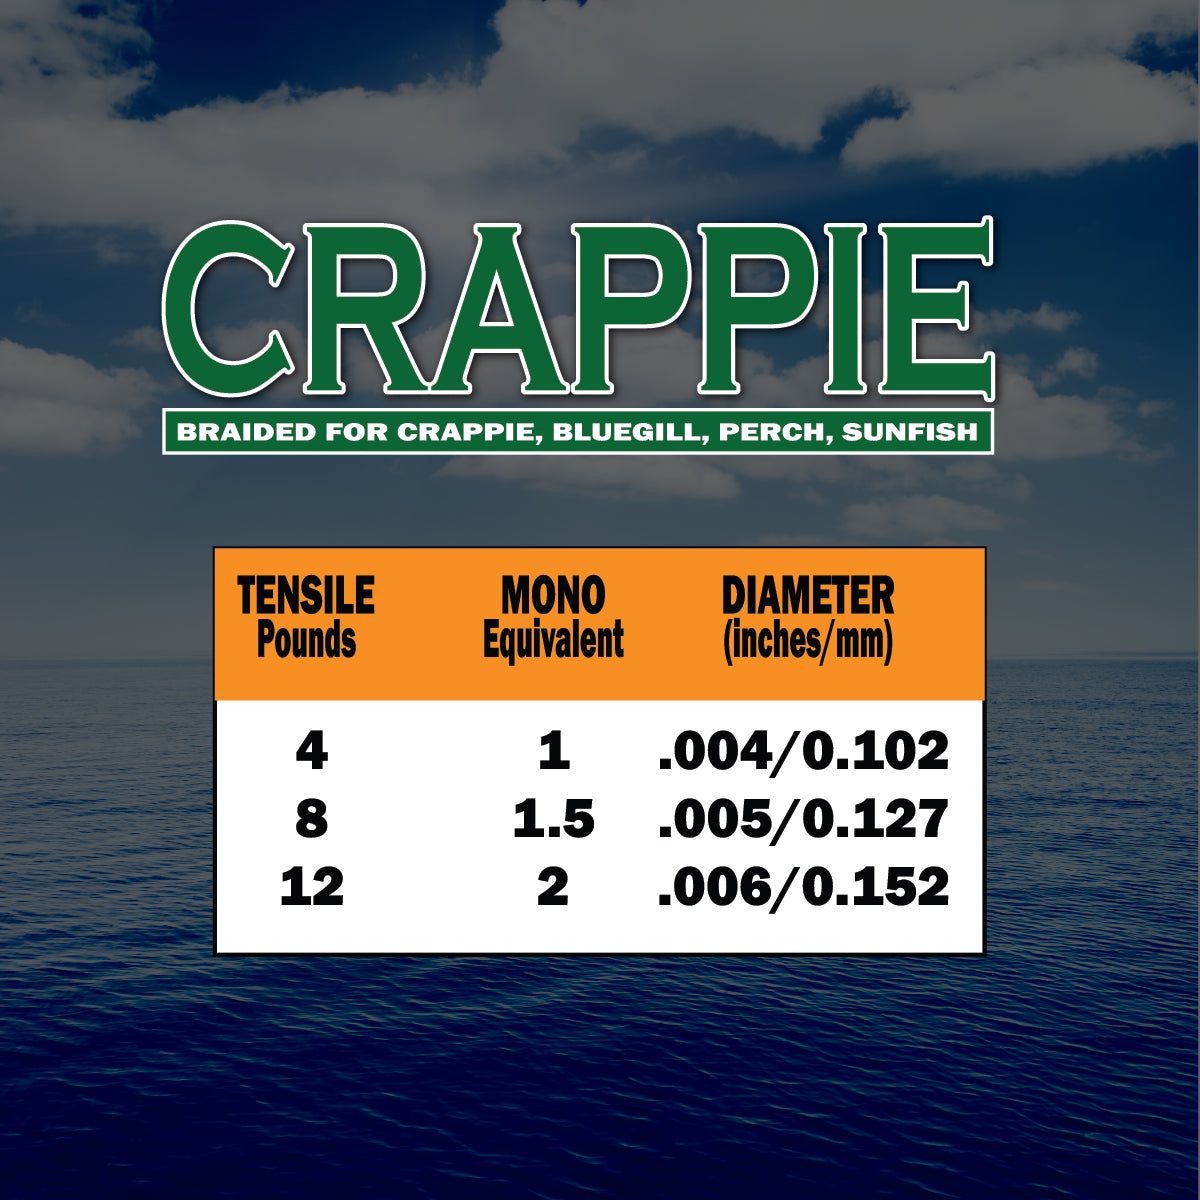 Crappie braid mono equivalent tensile diamter chart